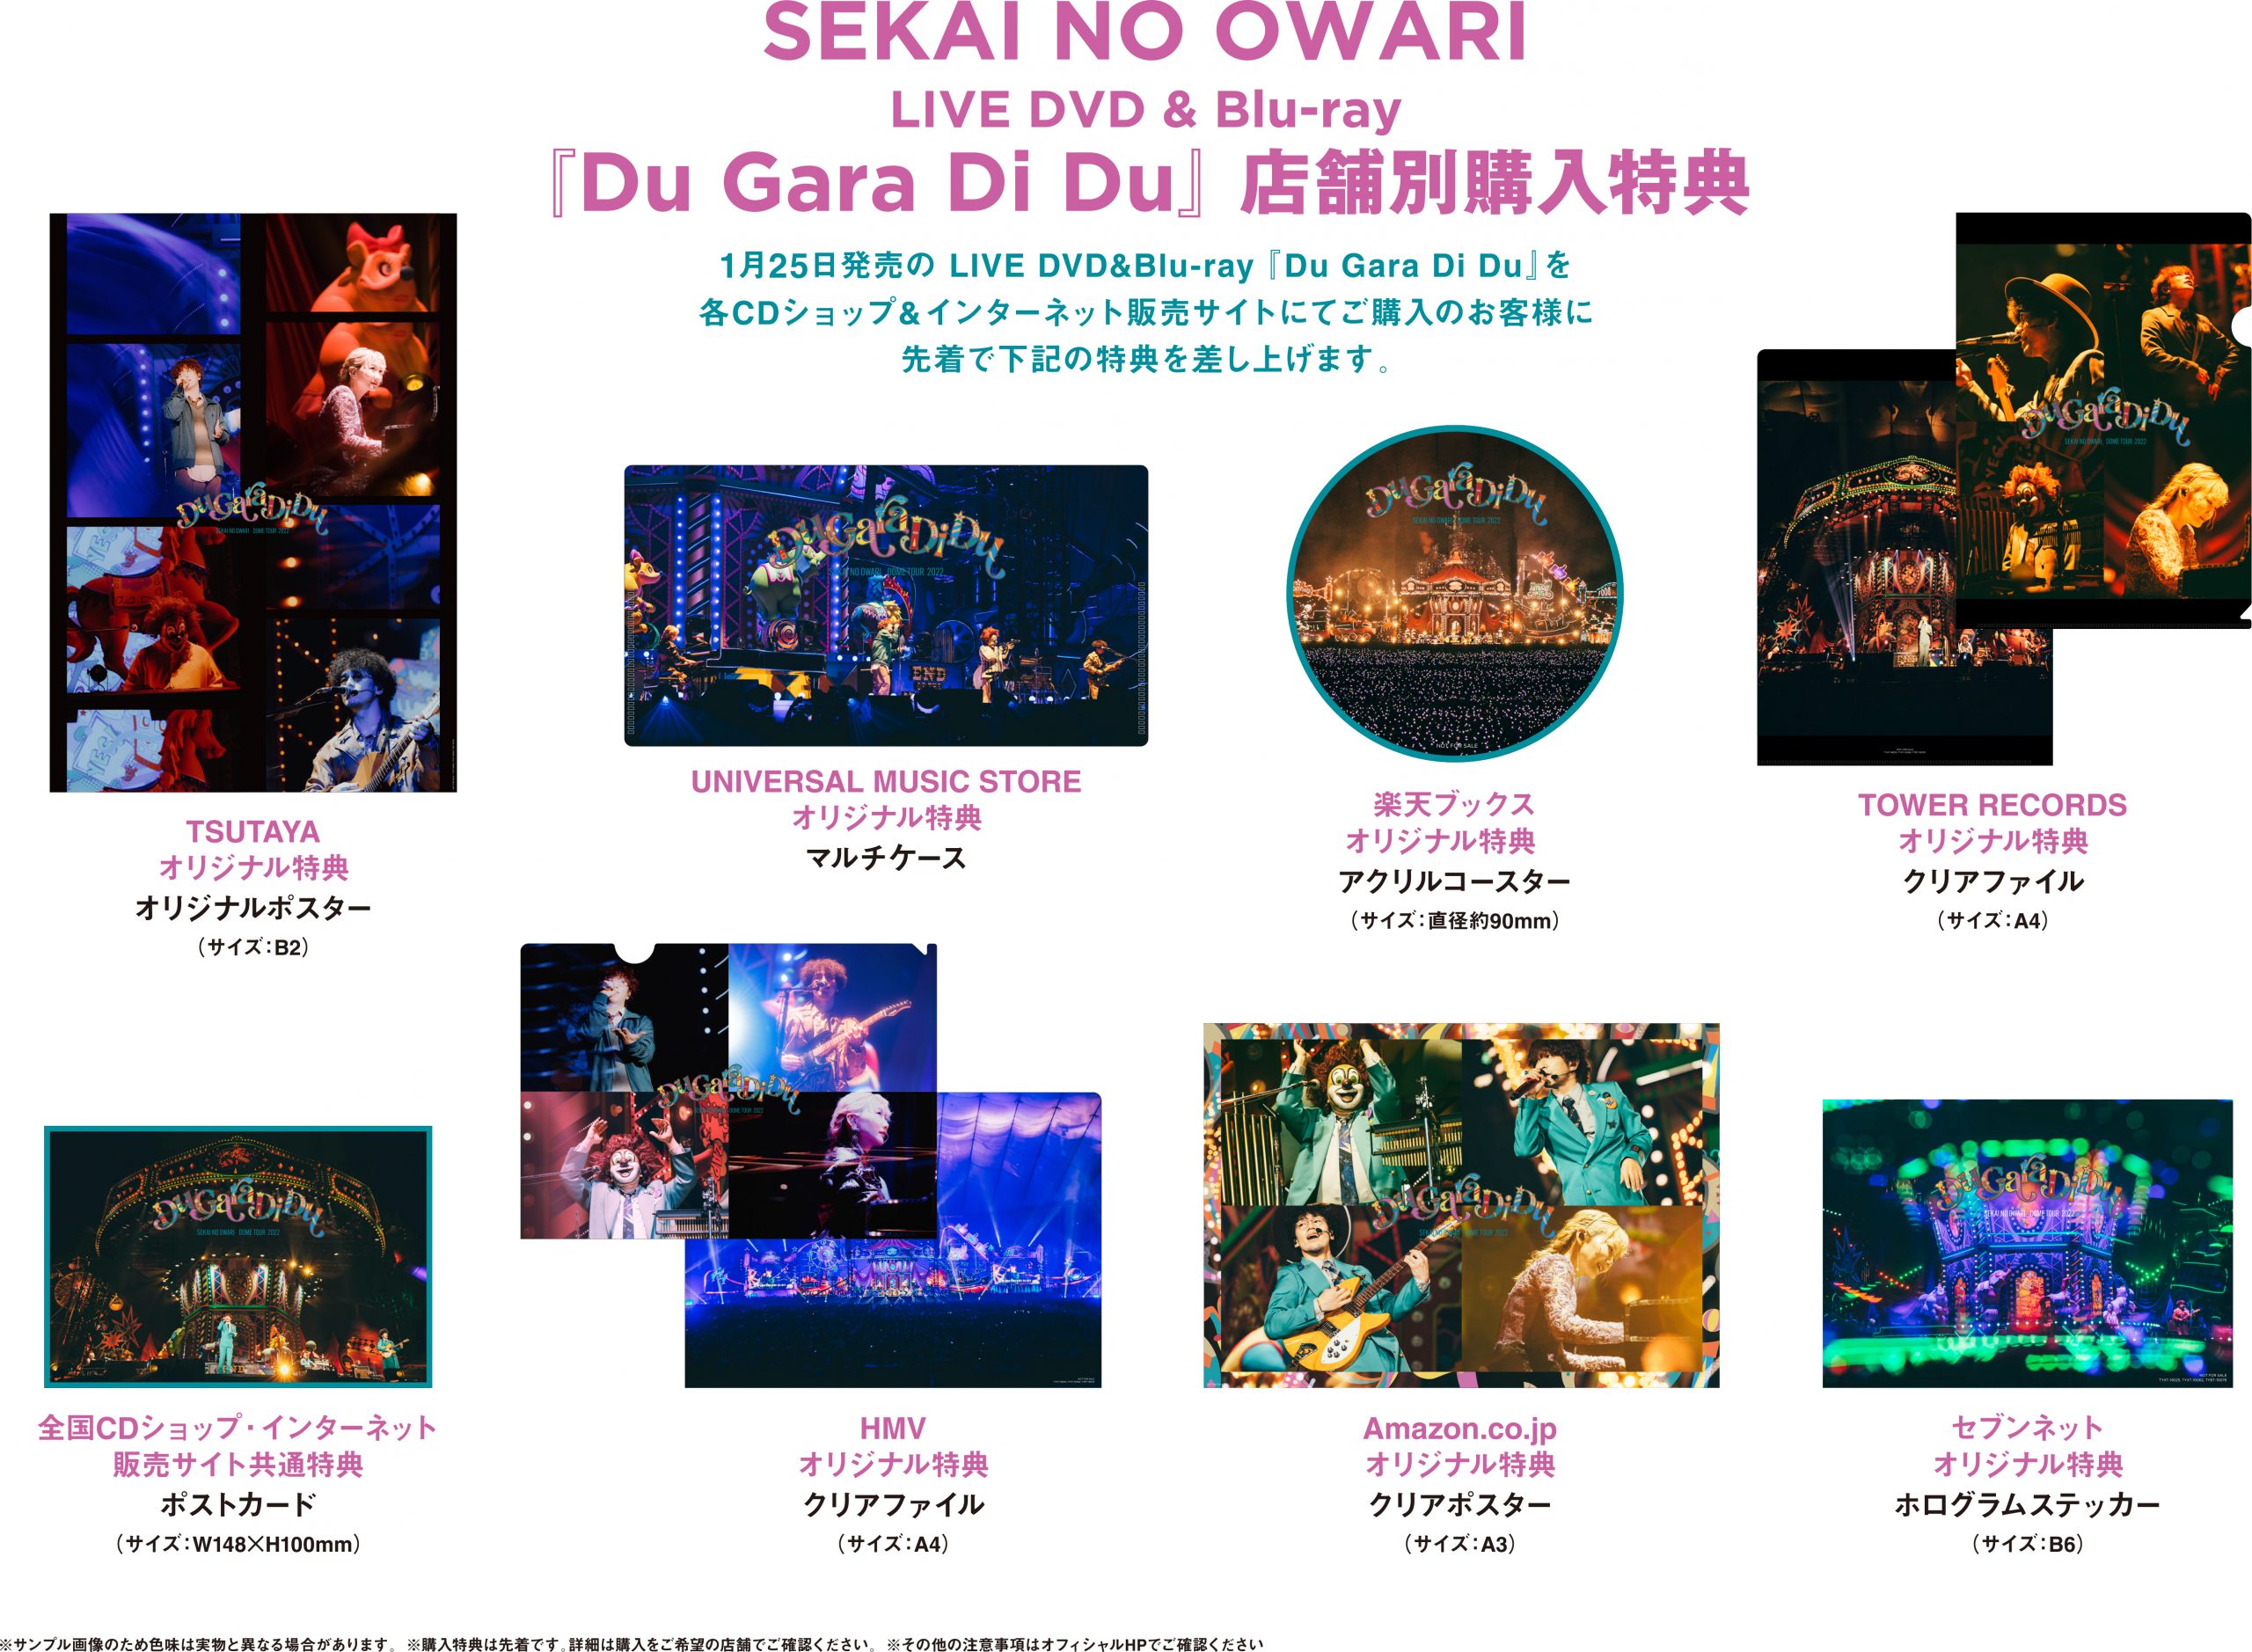 SEKAI NO OWARI CD DVDセット - CD